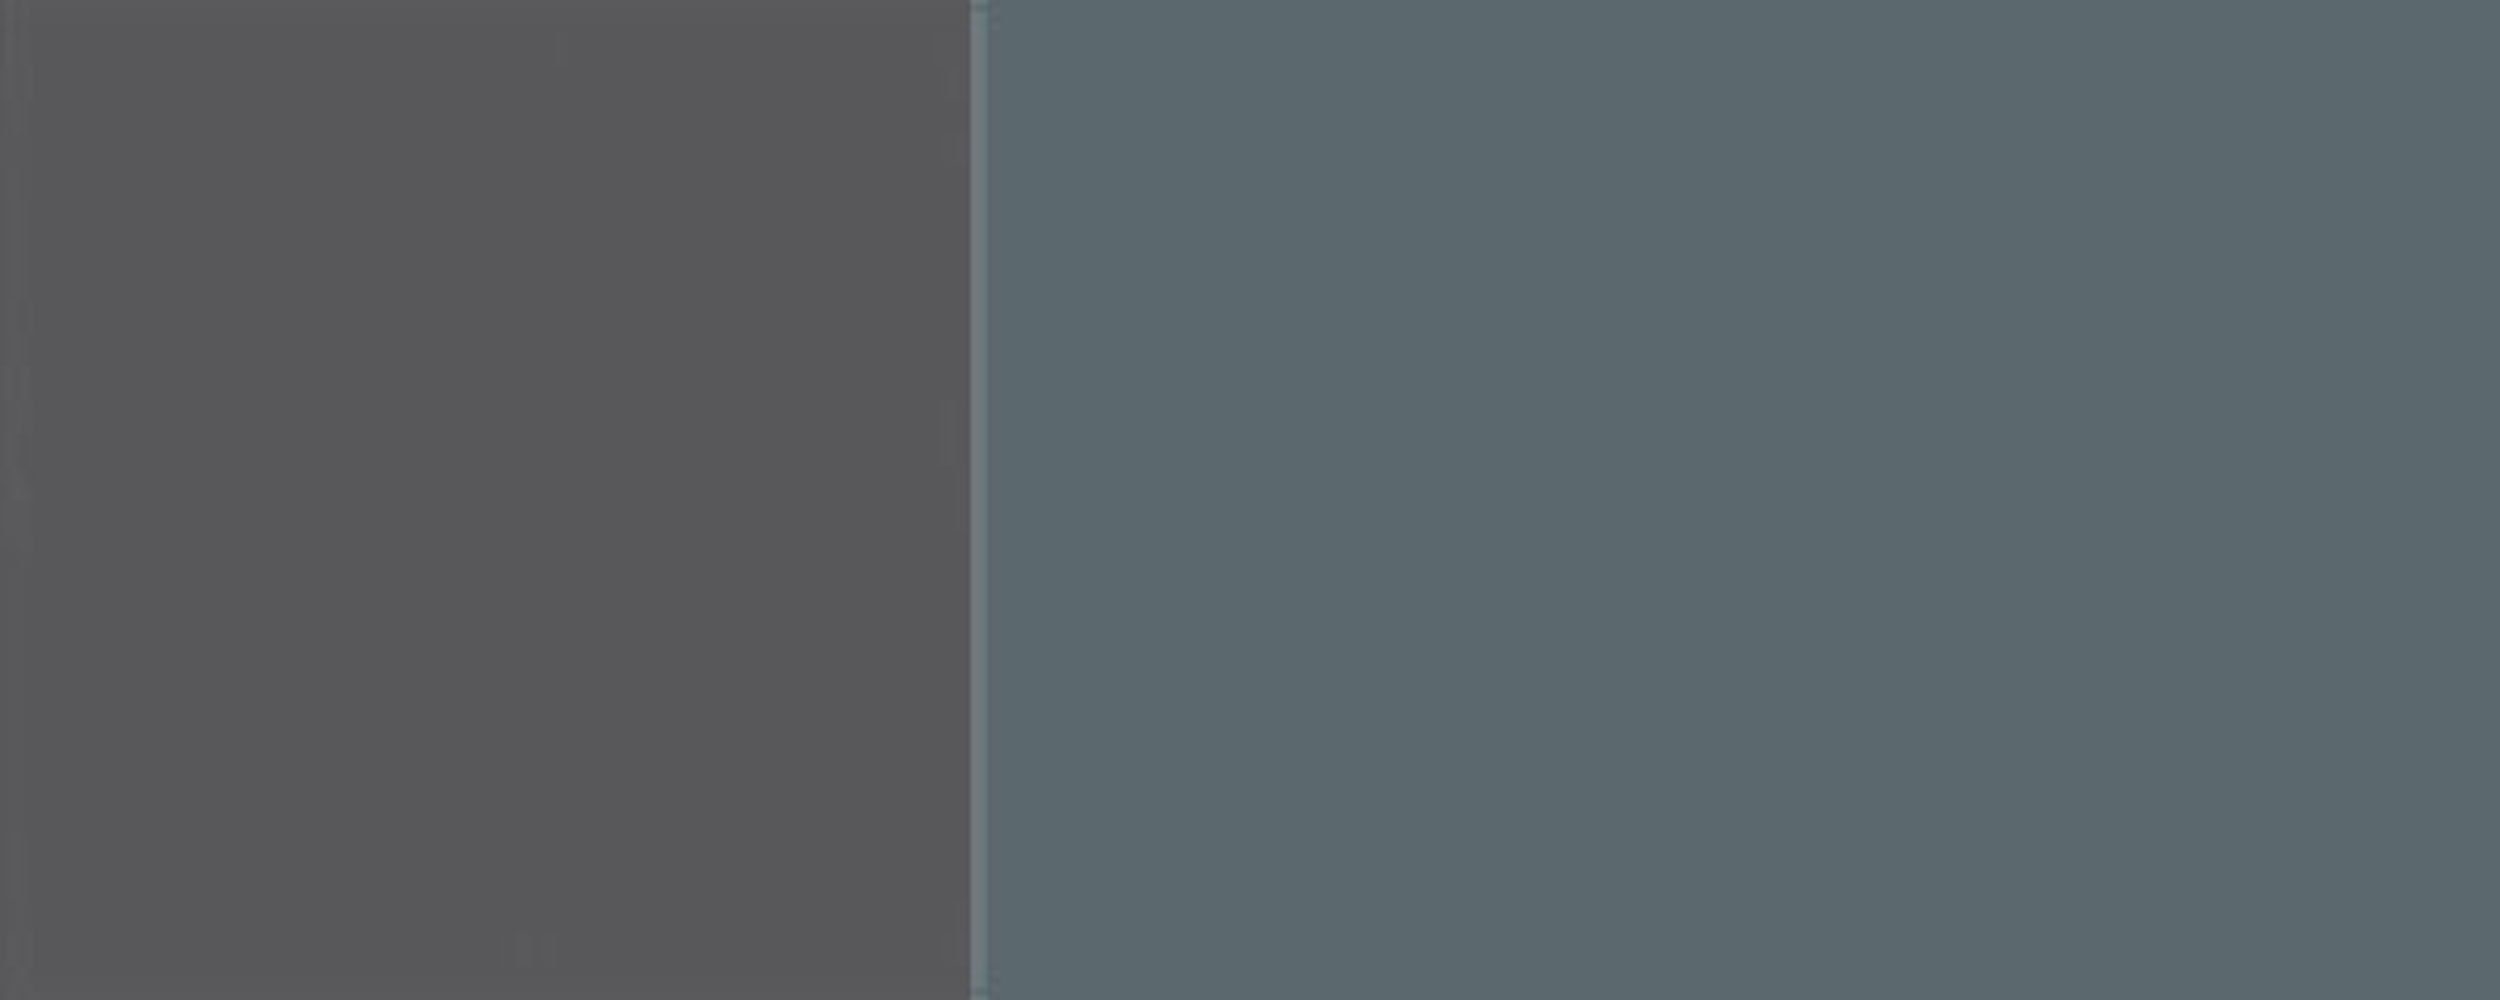 Florence Ausführung blaugrau grifflos 7031 Feldmann-Wohnen RAL Front-, 1-türig (Florence) Eckhängeschrank & wählbar Hochglanz Korpusfarbe 60cm